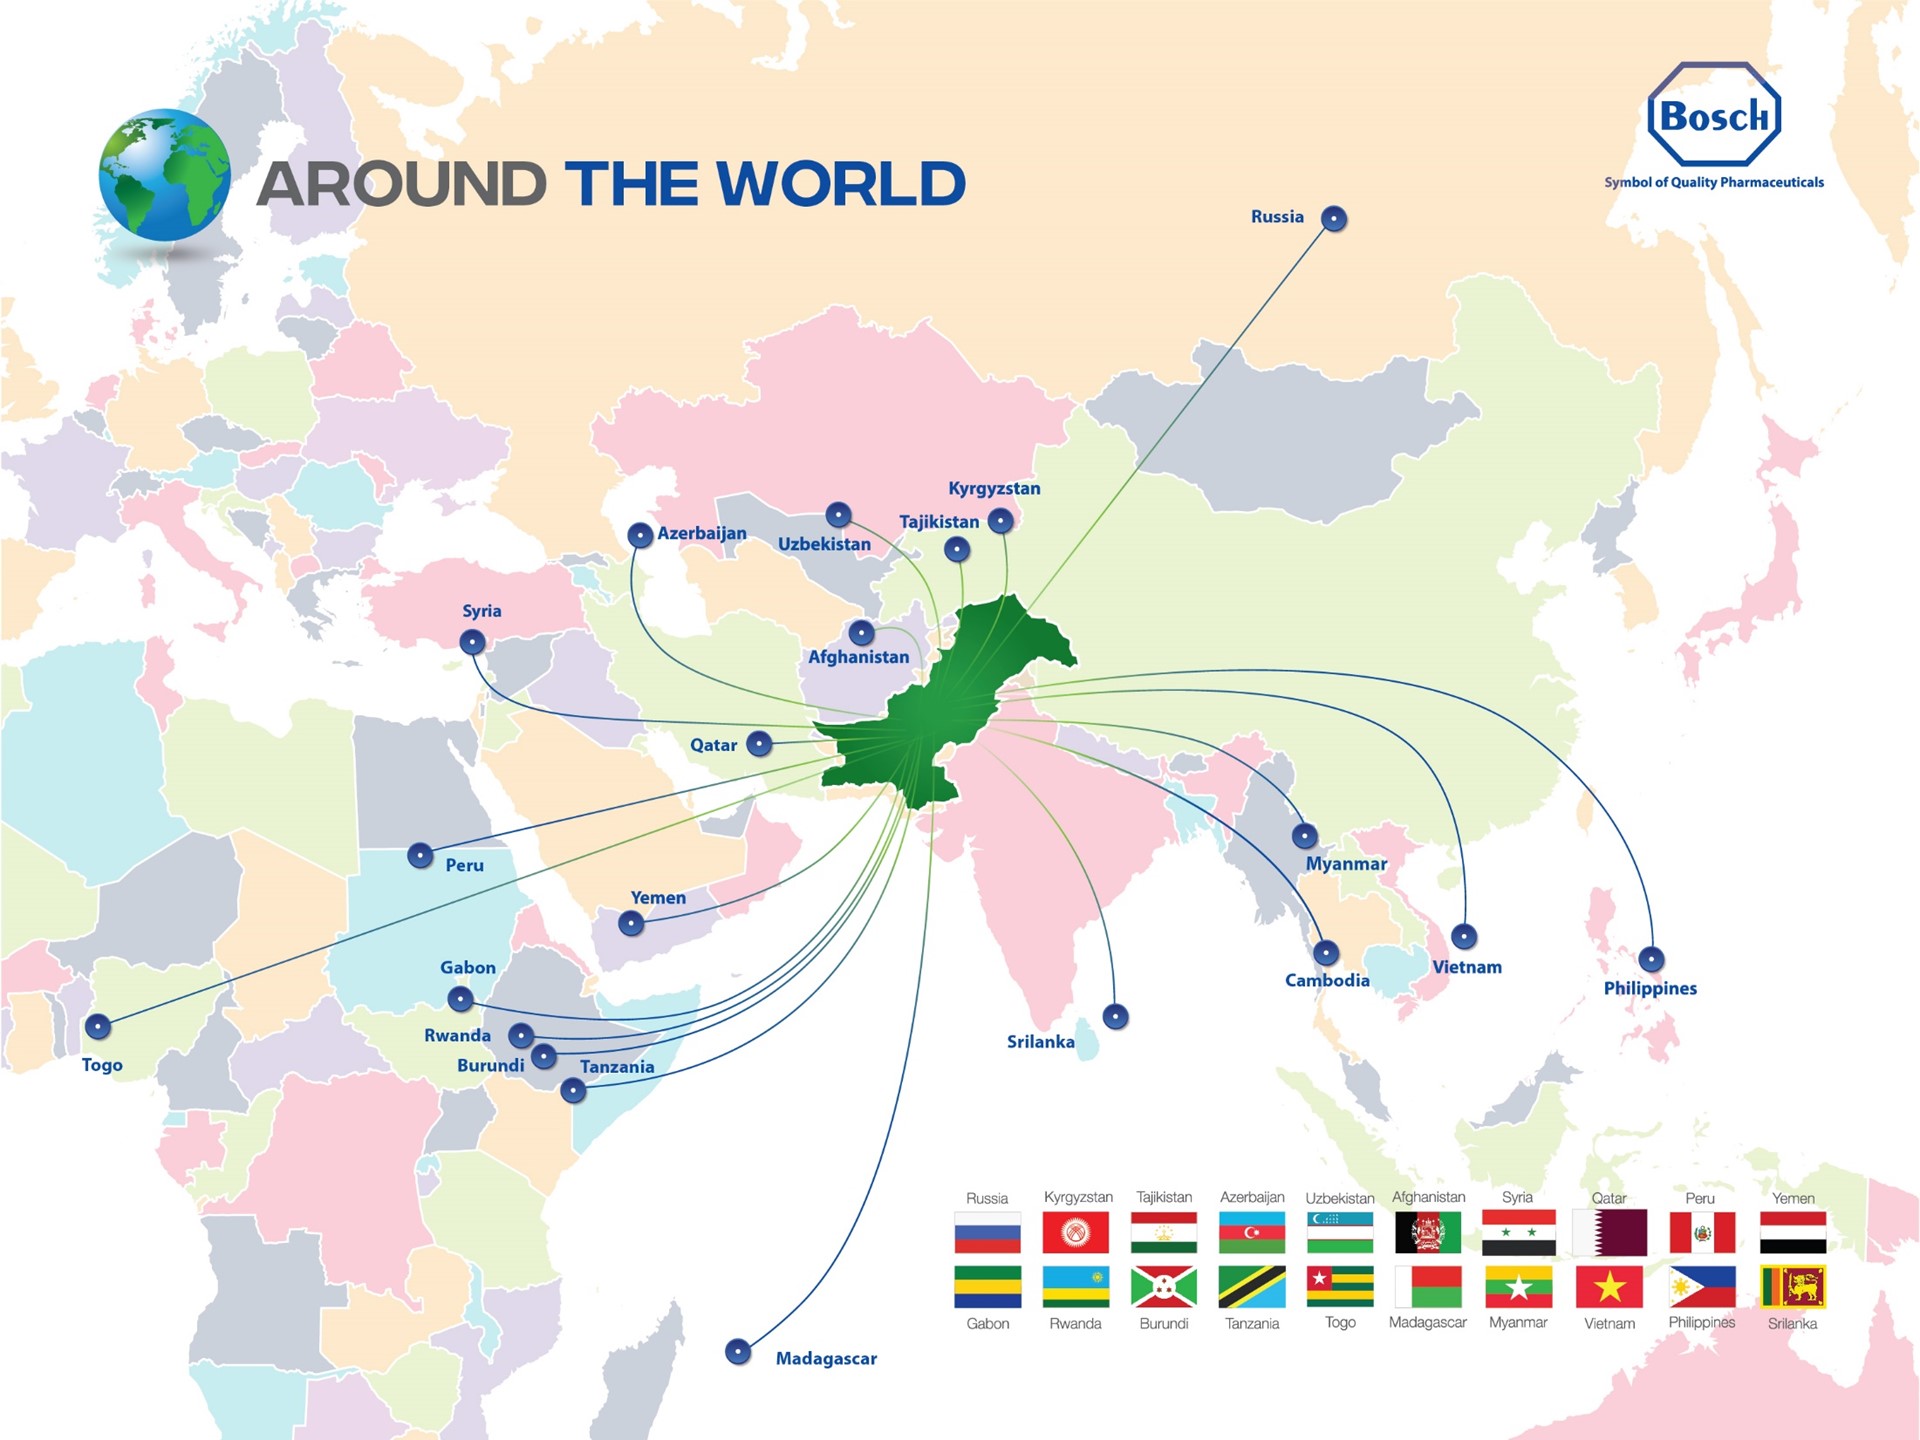 Bosch Exports Around the World